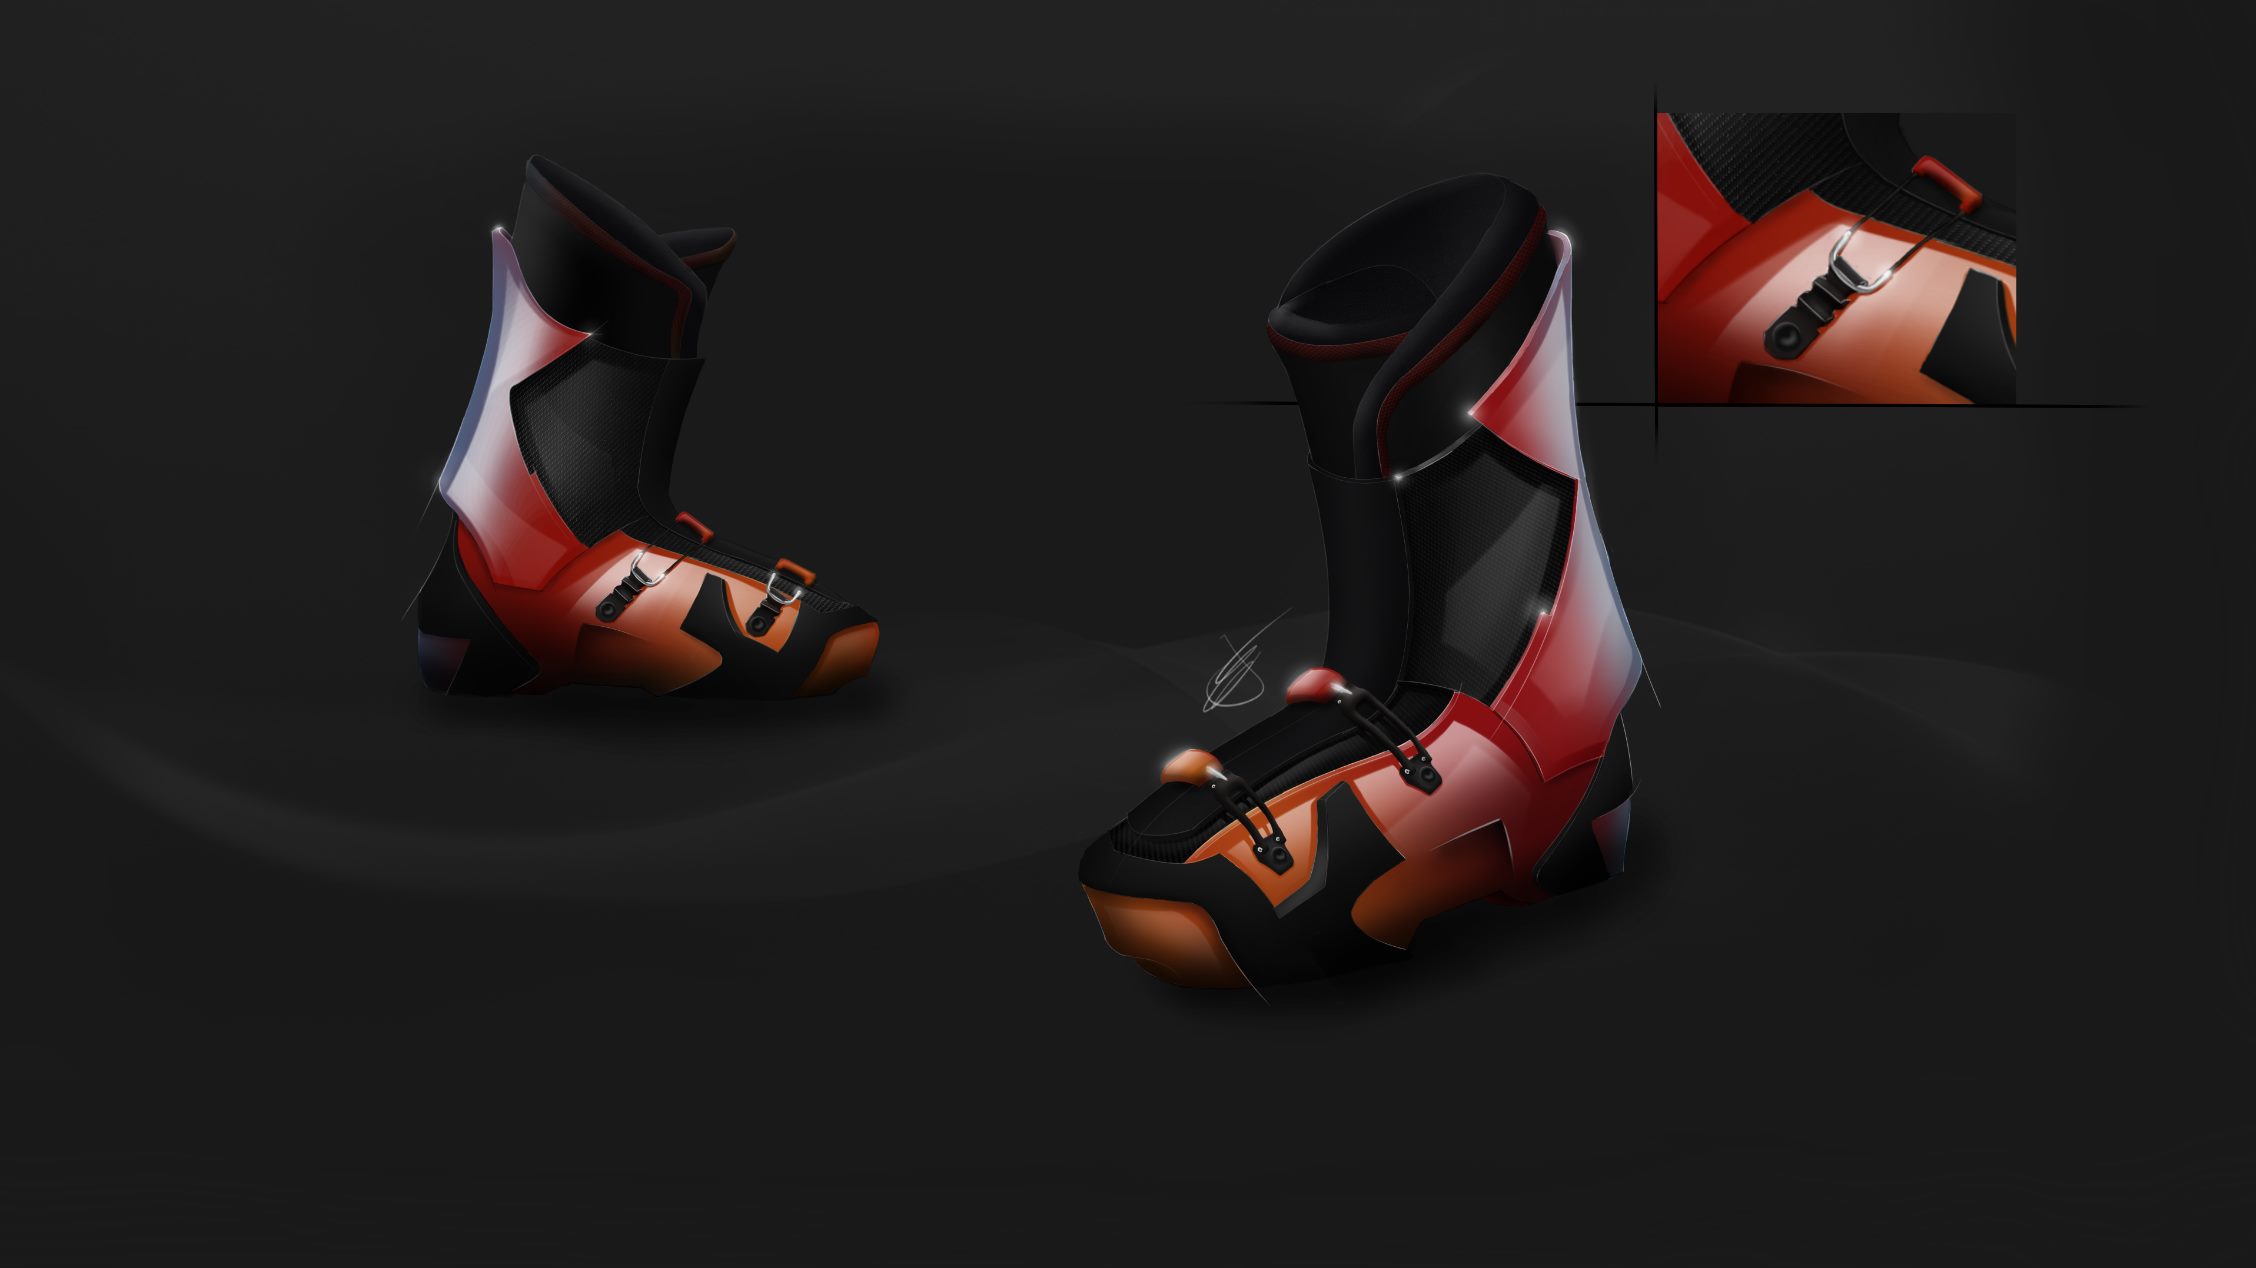 JW Design ski boot concept